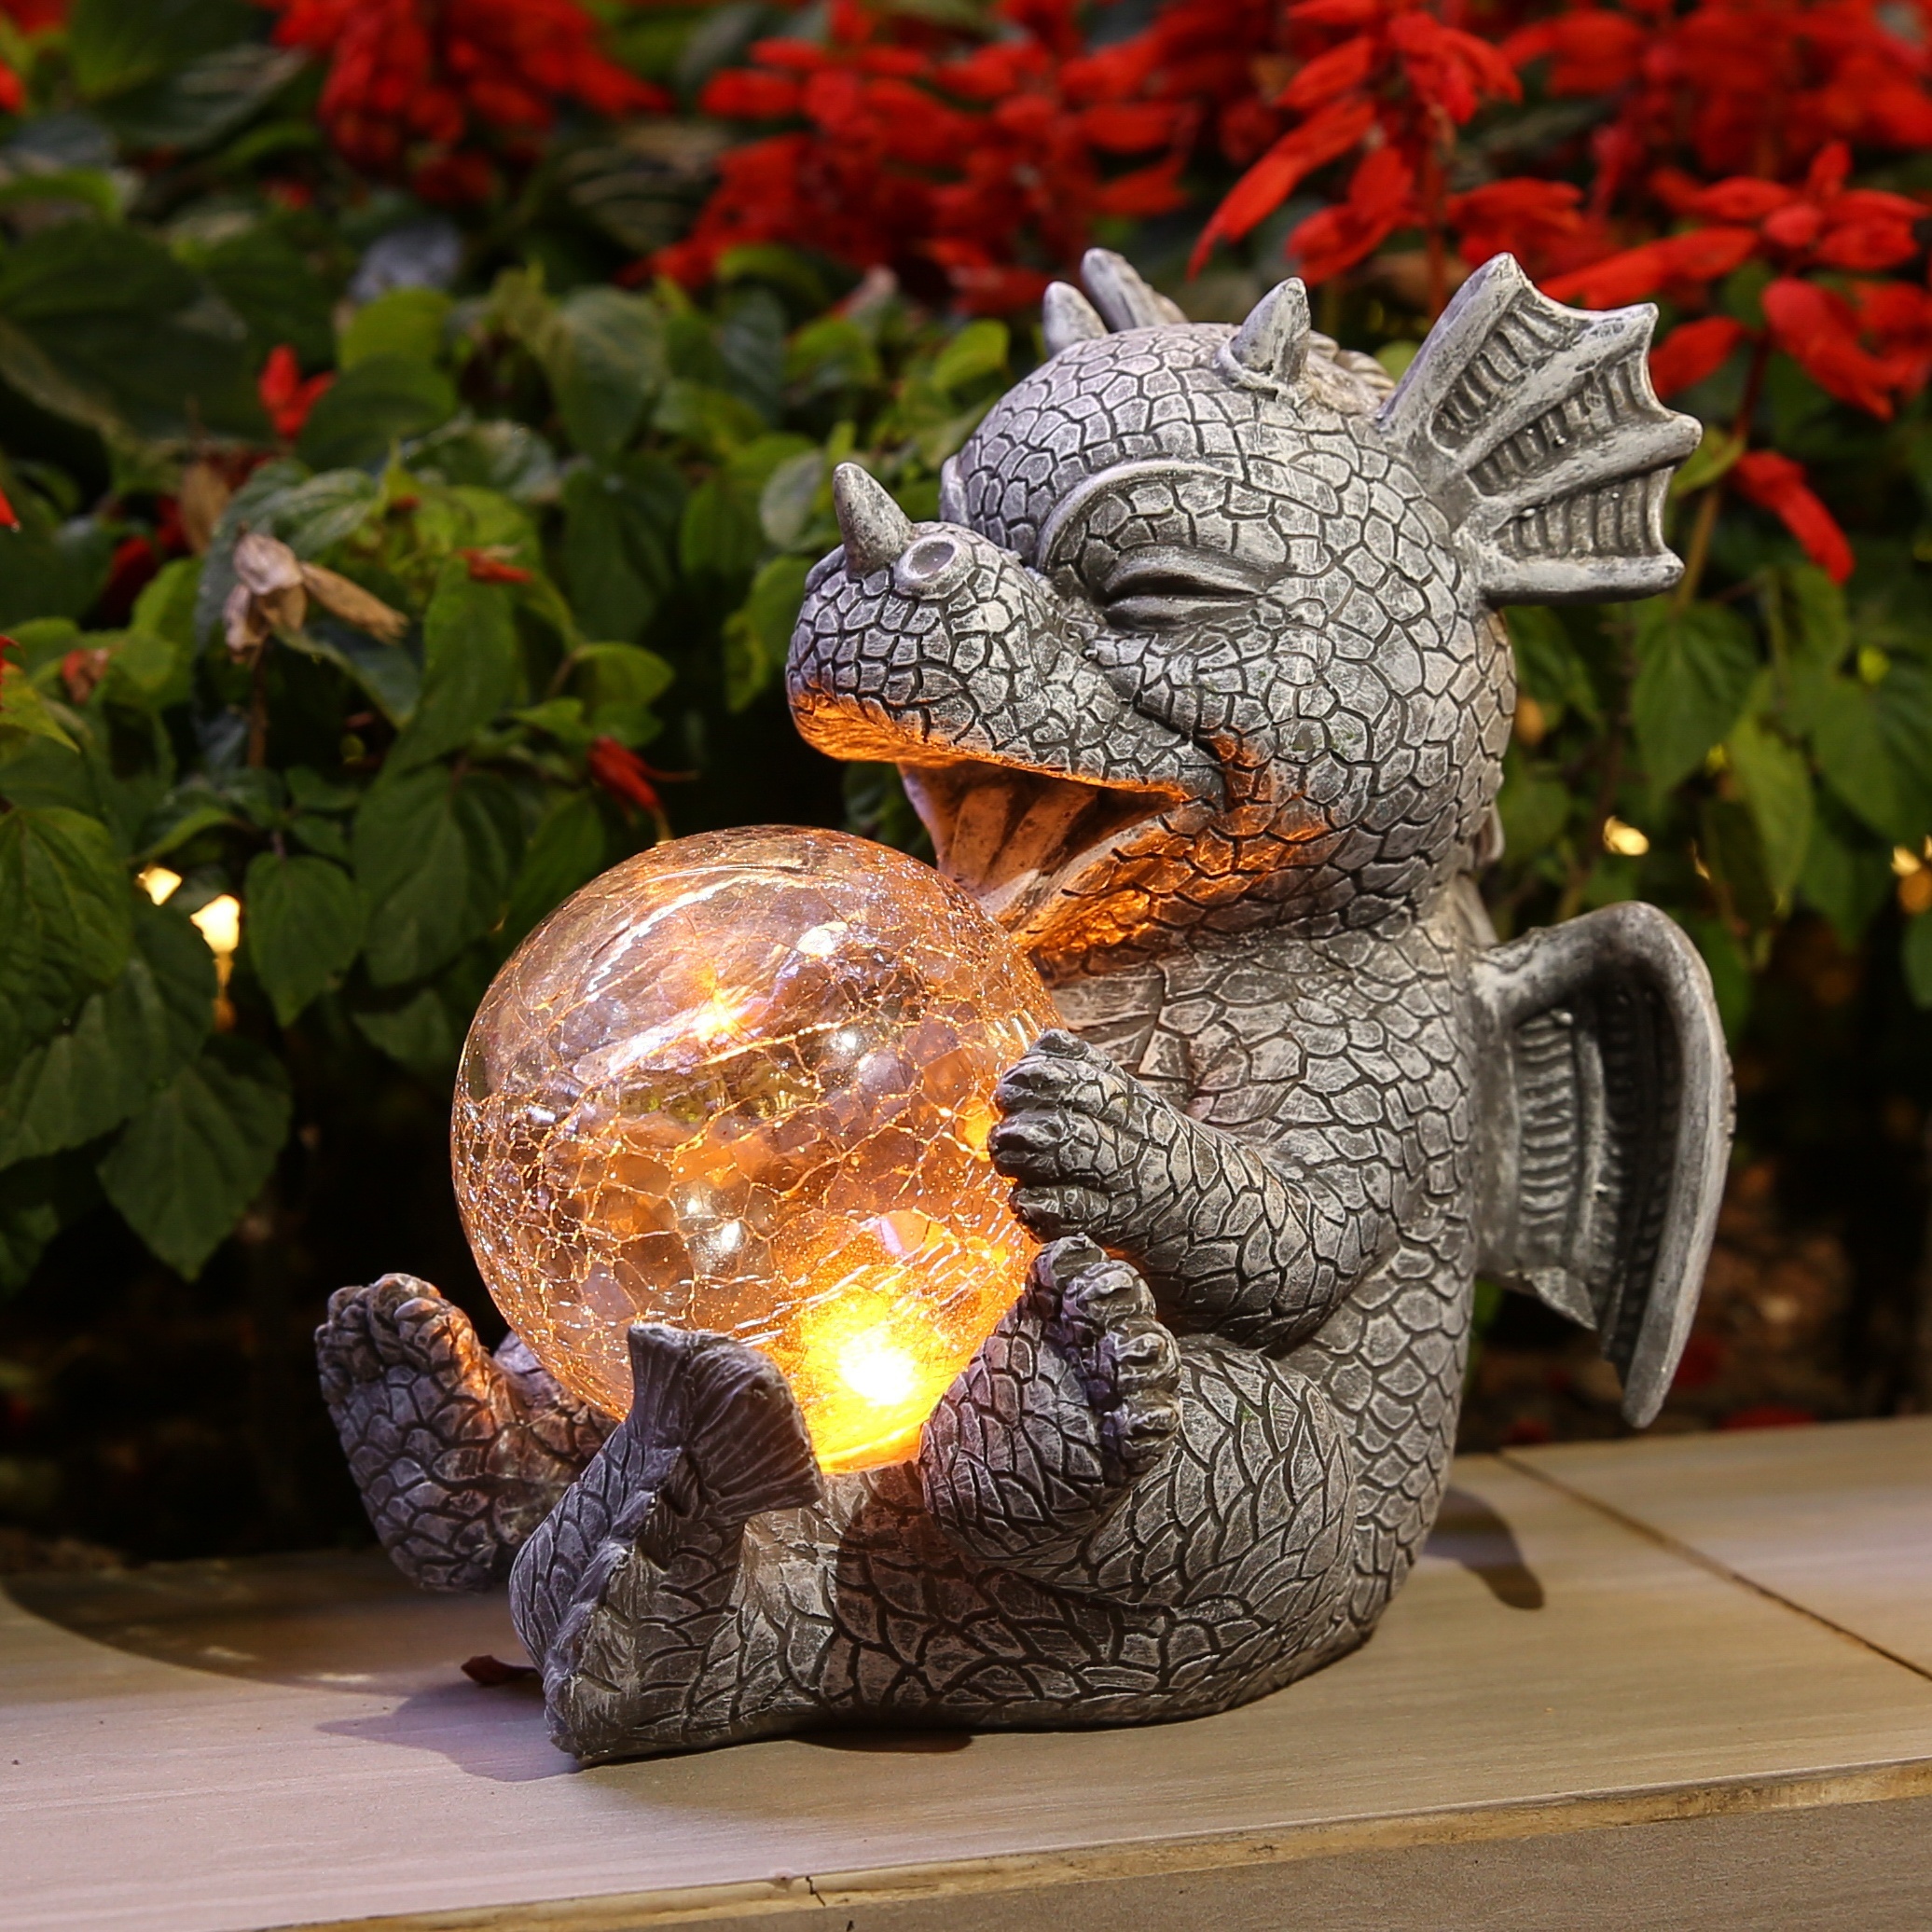 

Solar Led Light Resin Dragon Statue, Garden Dragon Sculpture With Magical Glowing Globe, Outdoor Lawn Porch Decor